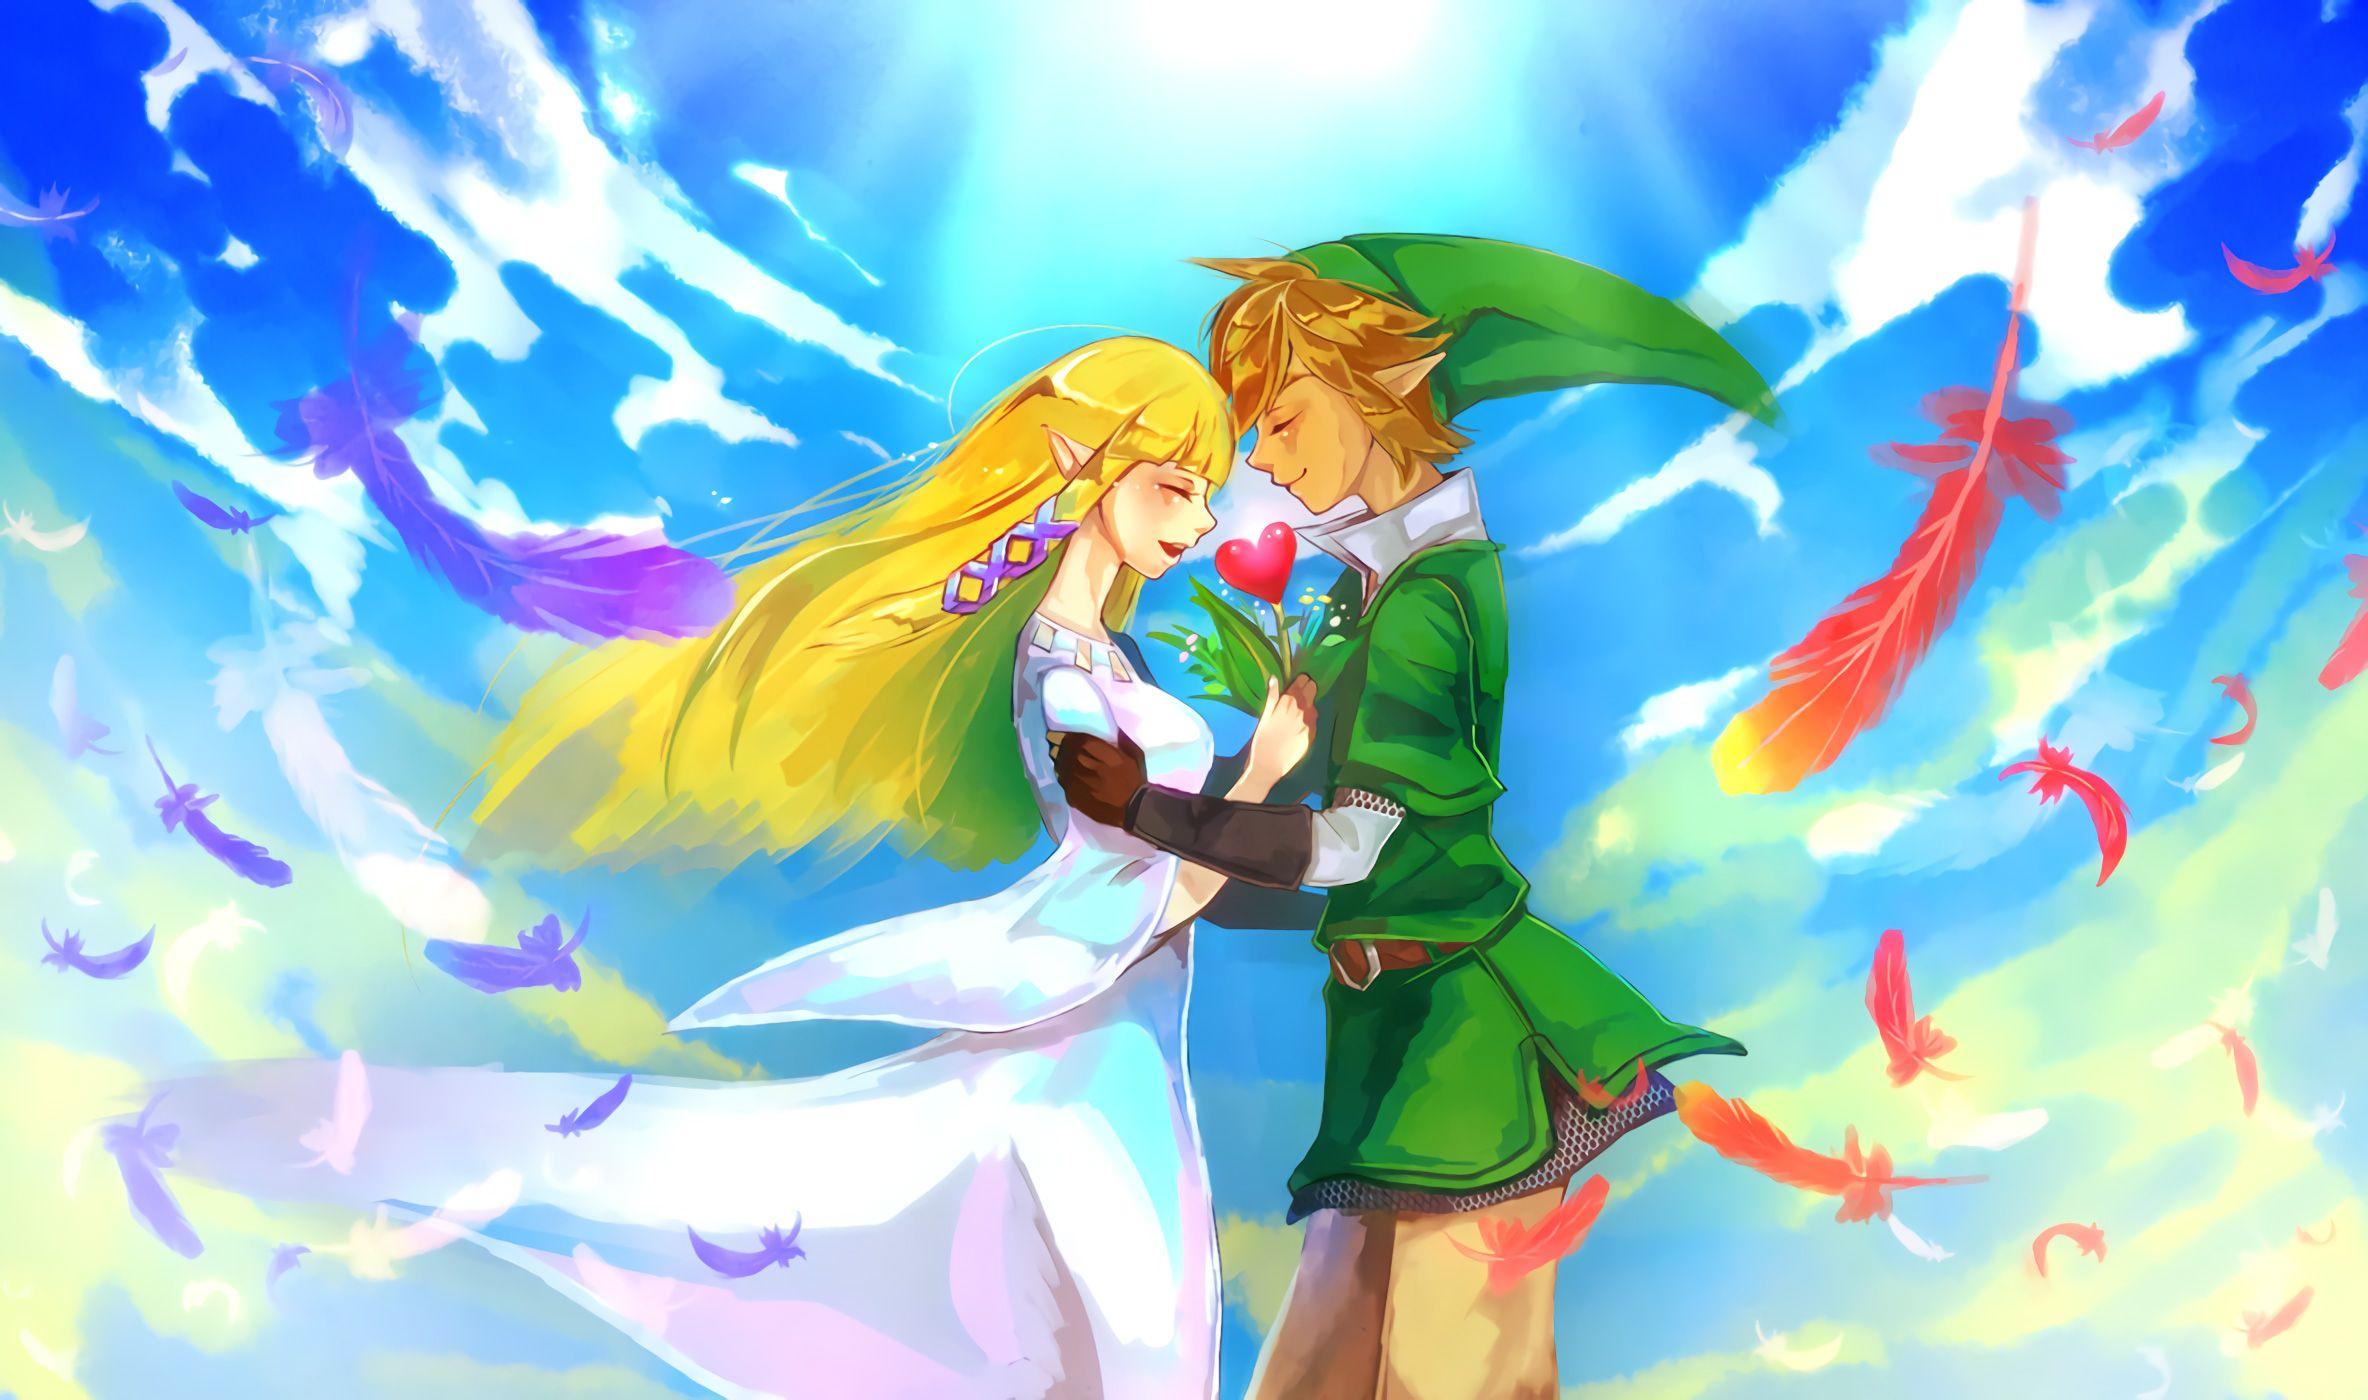 Wallpaper Link, The Legend of Zelda, Skyward Sword, Anime,. Wallpaper for iPhone, Android, Mobile and Desktop